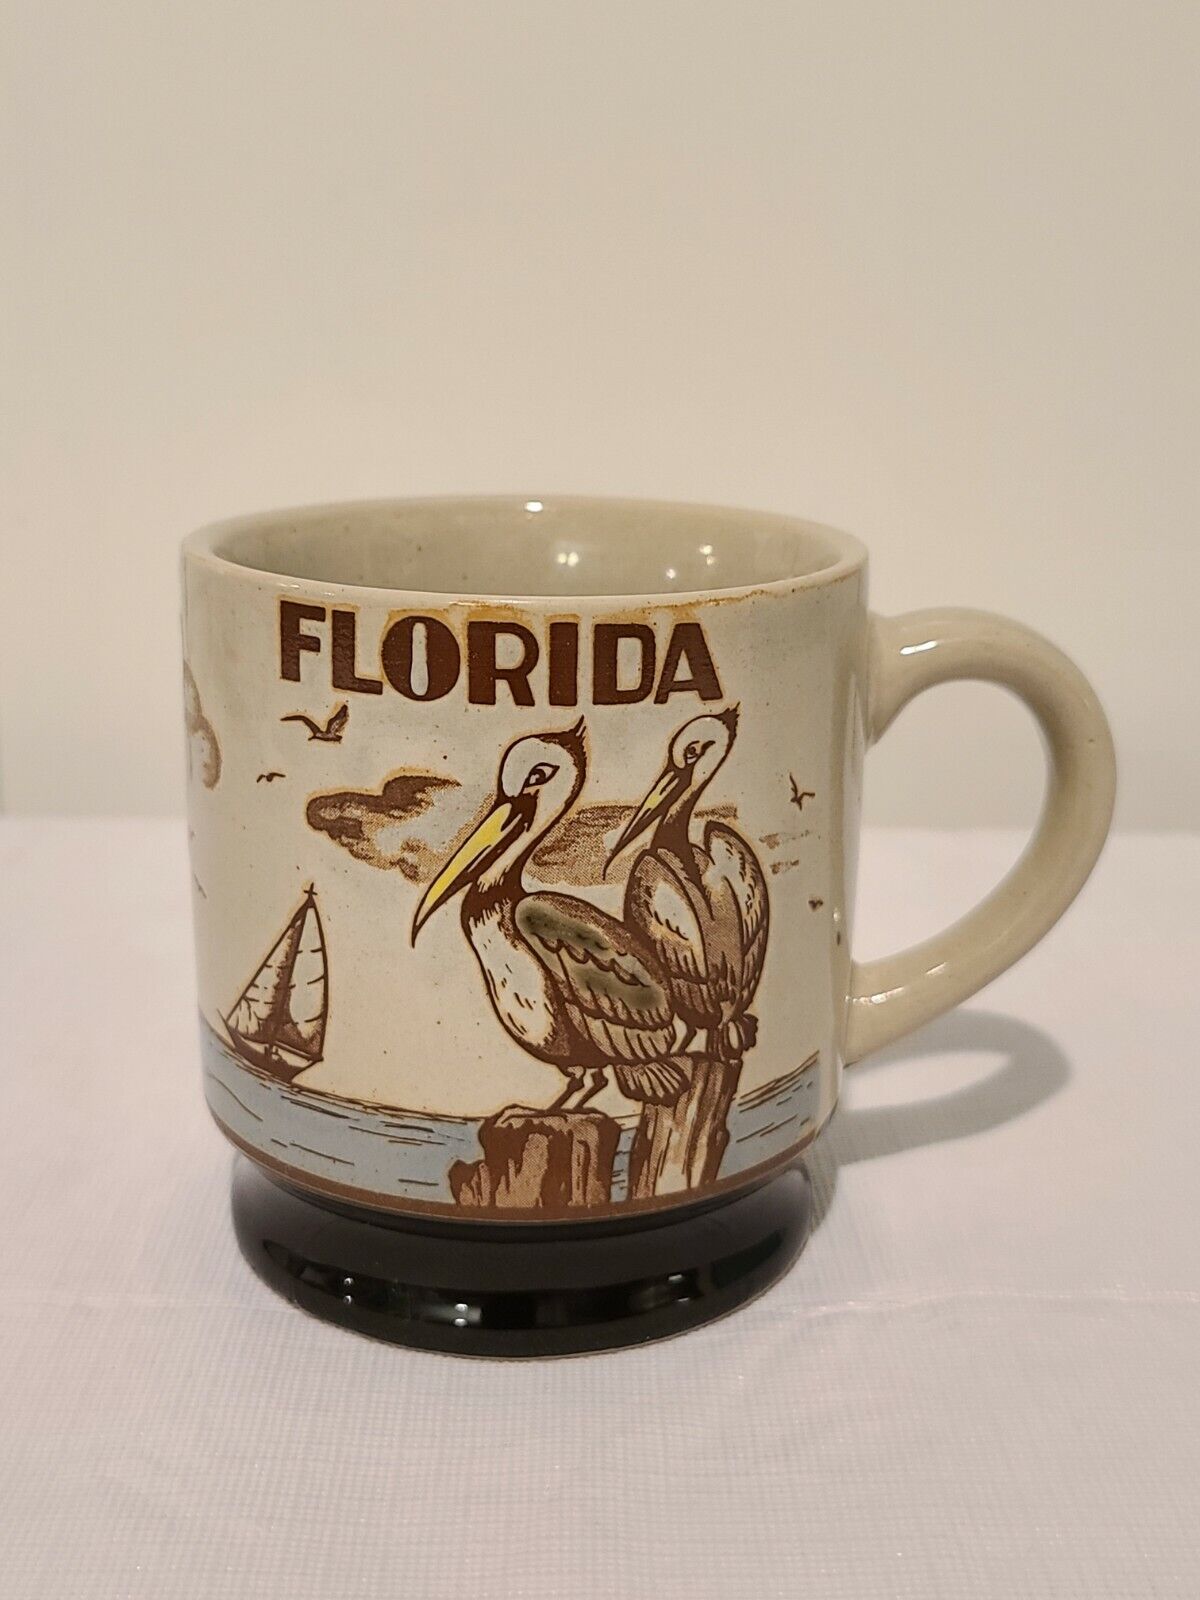 Vintage Stoneware Florida Mug With Dock, Pelicans, And Sailboats